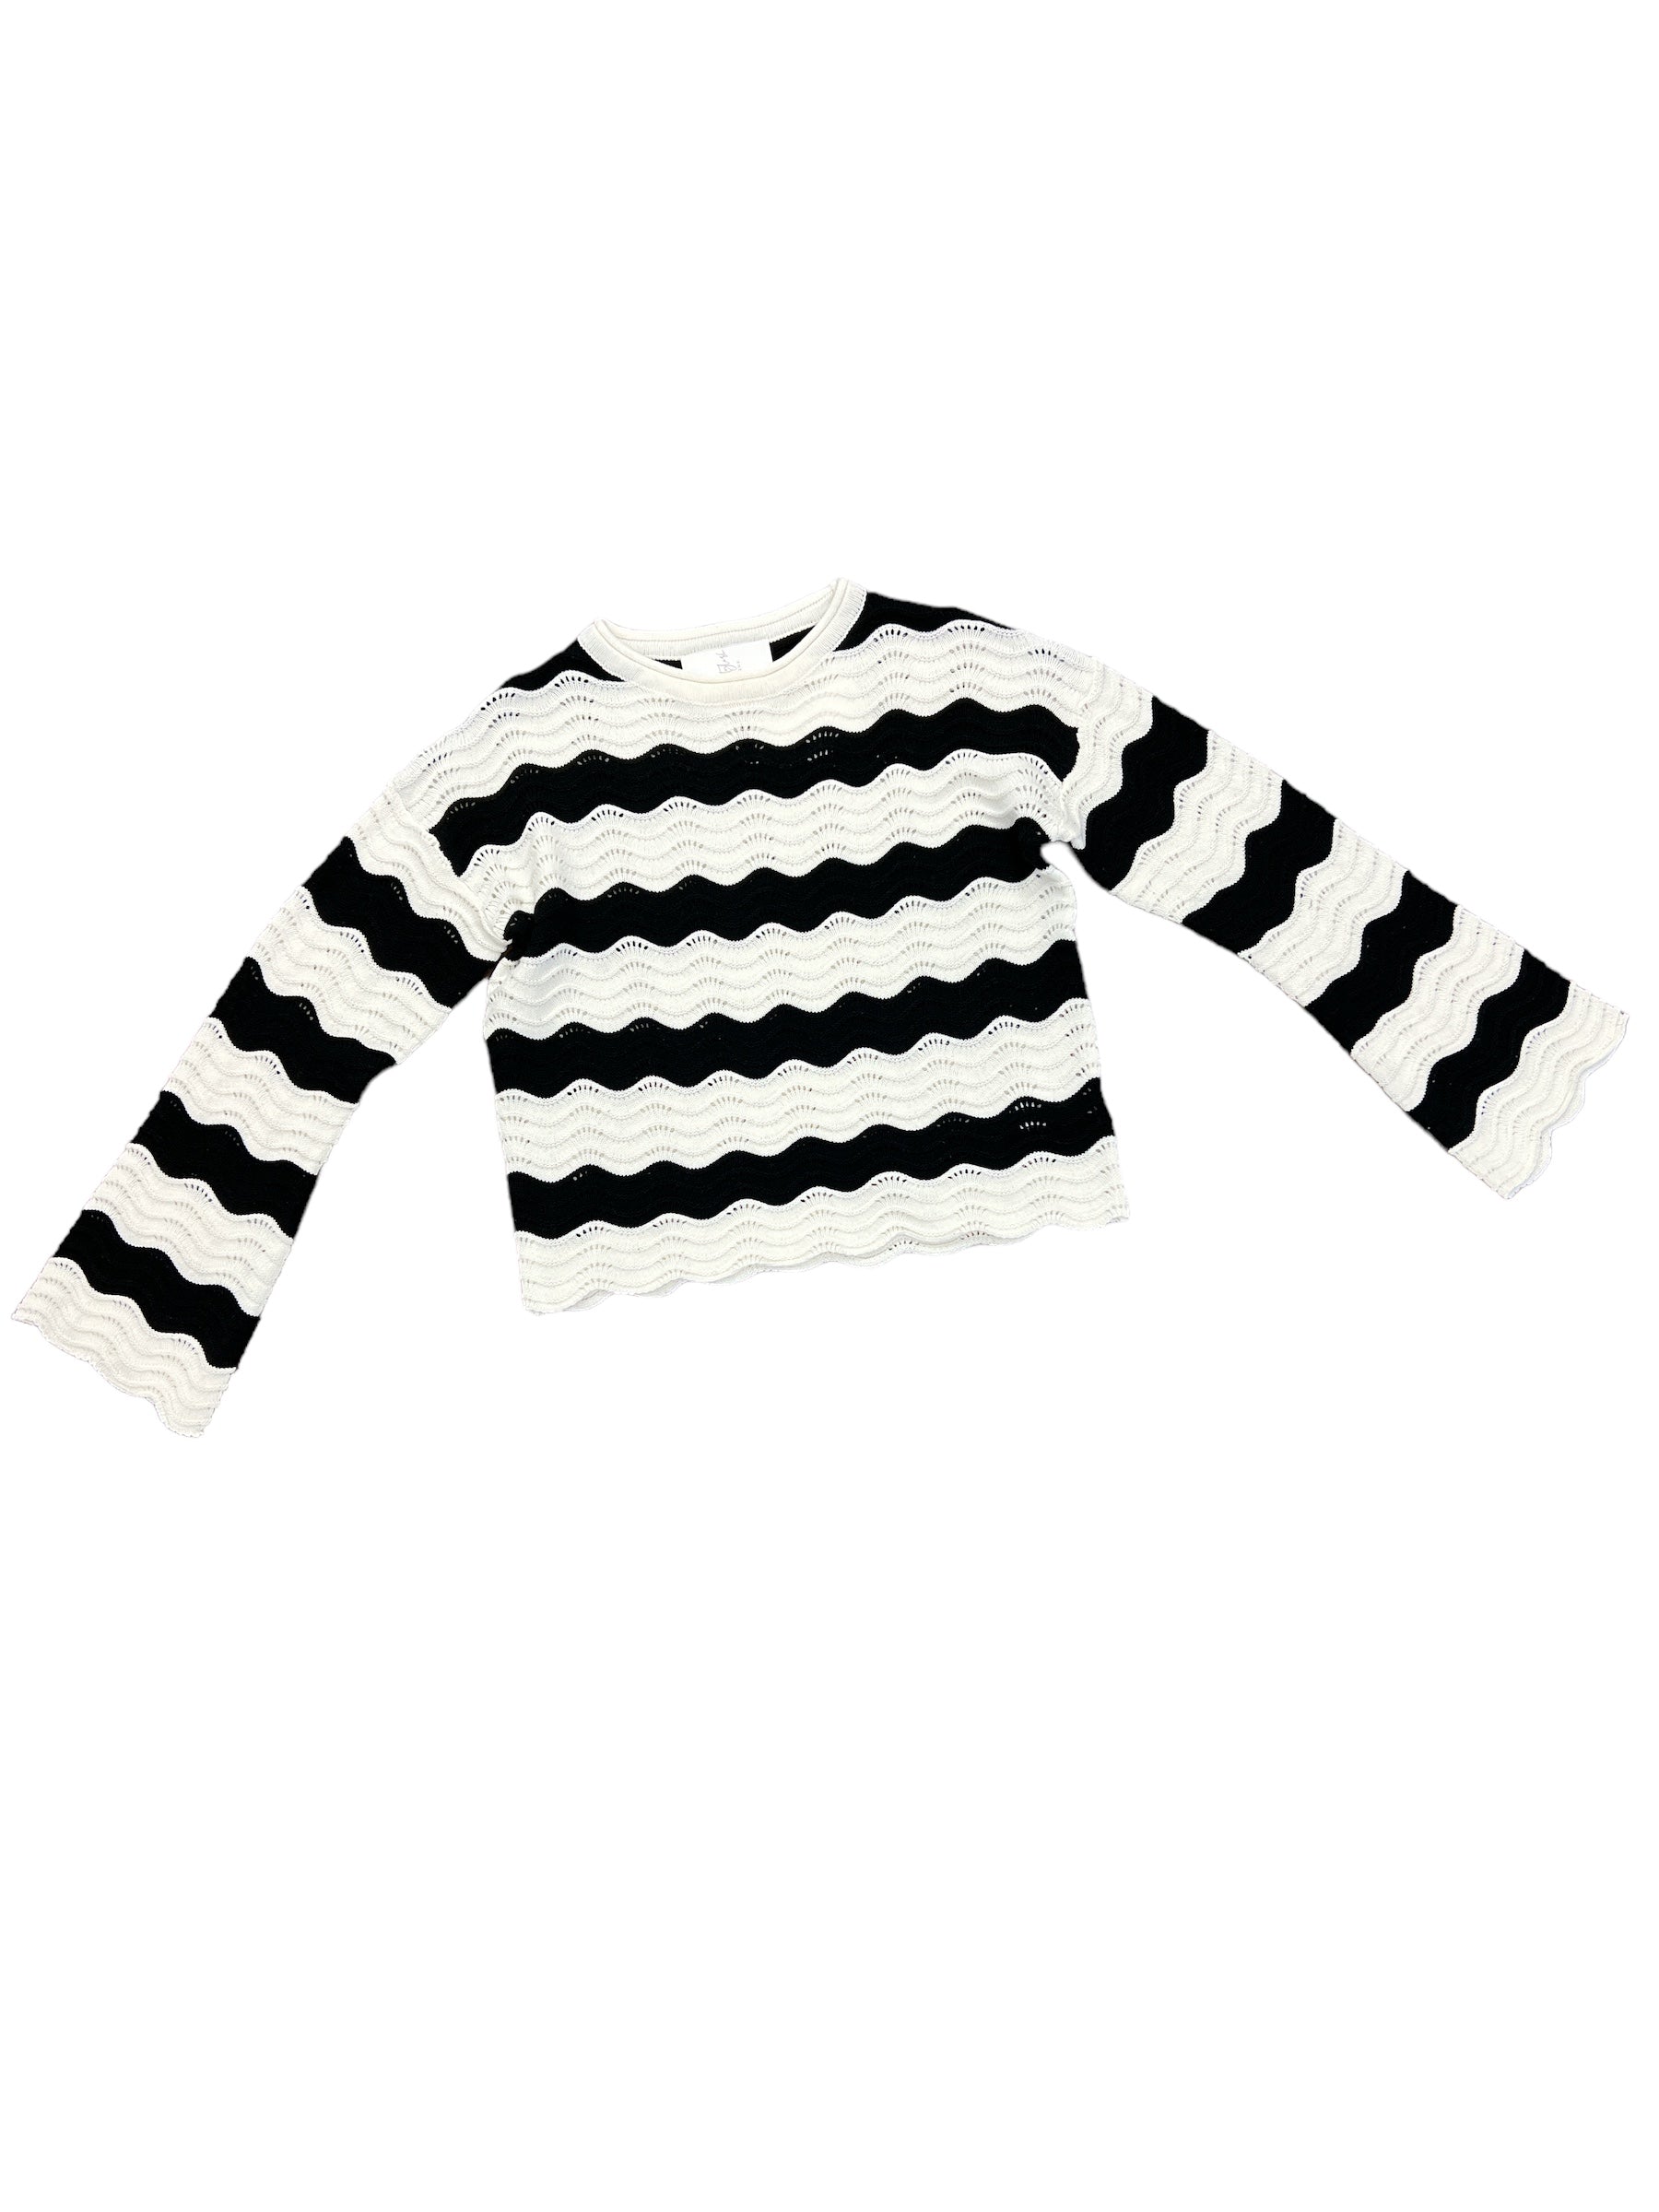 Daisy Sweater-140 Sweaters, Cardigans & Sweatshirts-Simply Stylish Boutique-Simply Stylish Boutique | Women’s & Kid’s Fashion | Paducah, KY